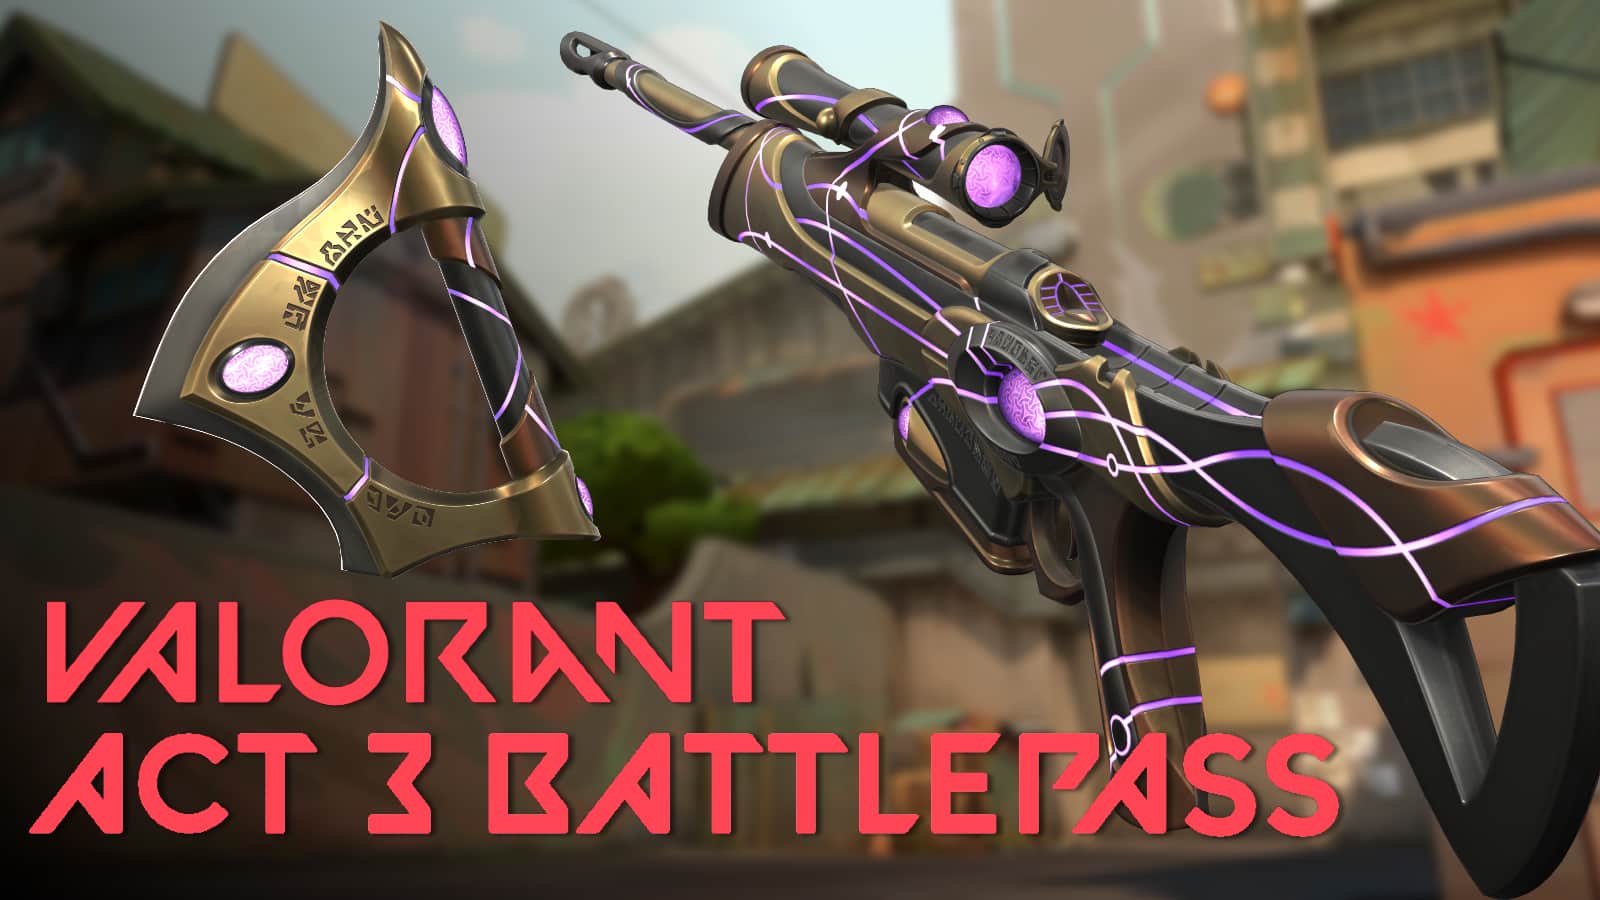 Valorant Episode 3 Act 3 Battlepass: New skins, tiers & rewards